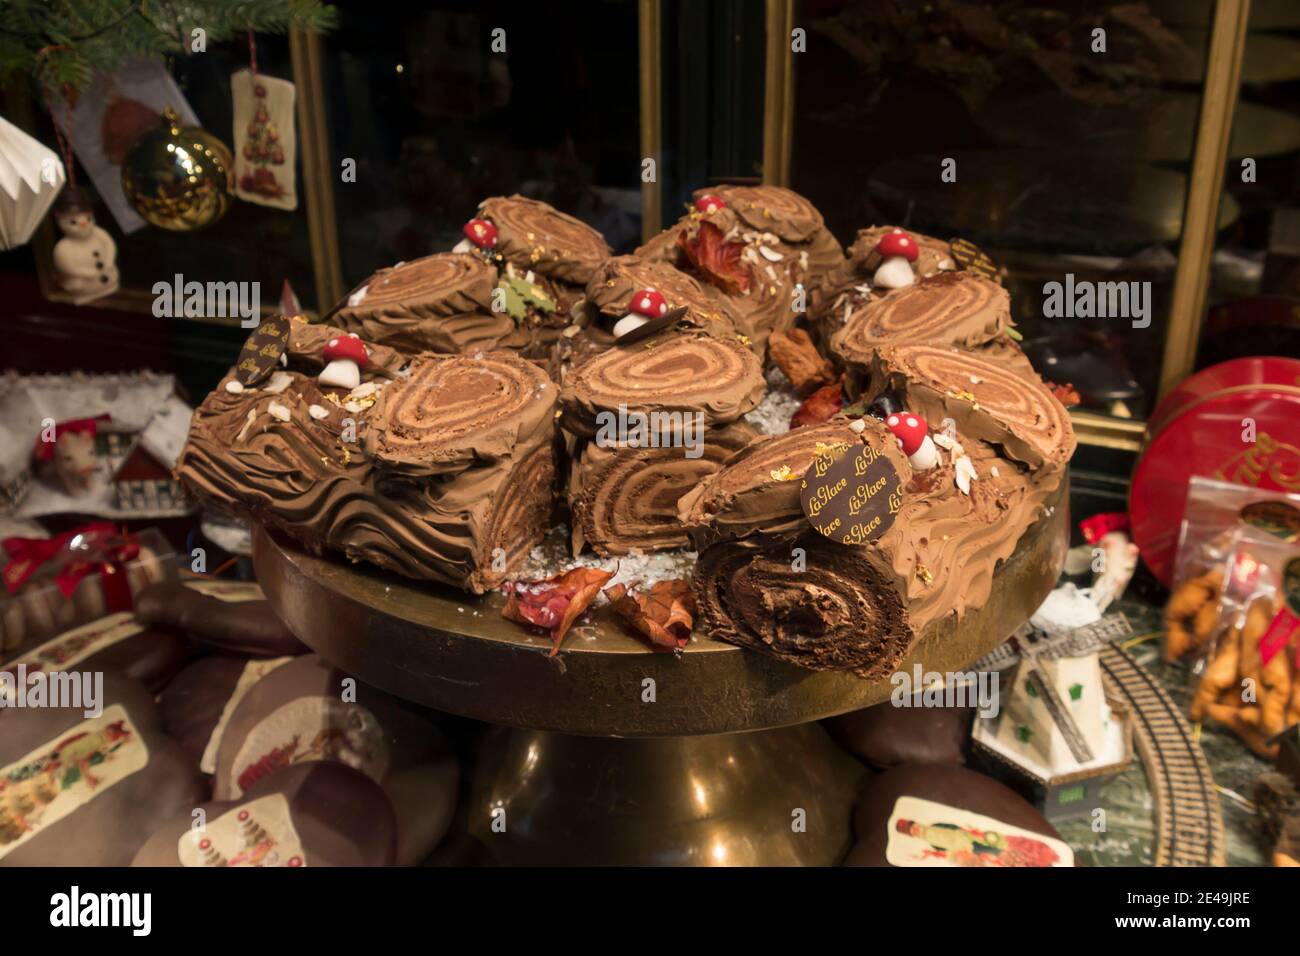 Copenhagen, Denmark - 12 Dec 2020: Variety of cakes from the famous La Glace in Copenhagen Stock Photo